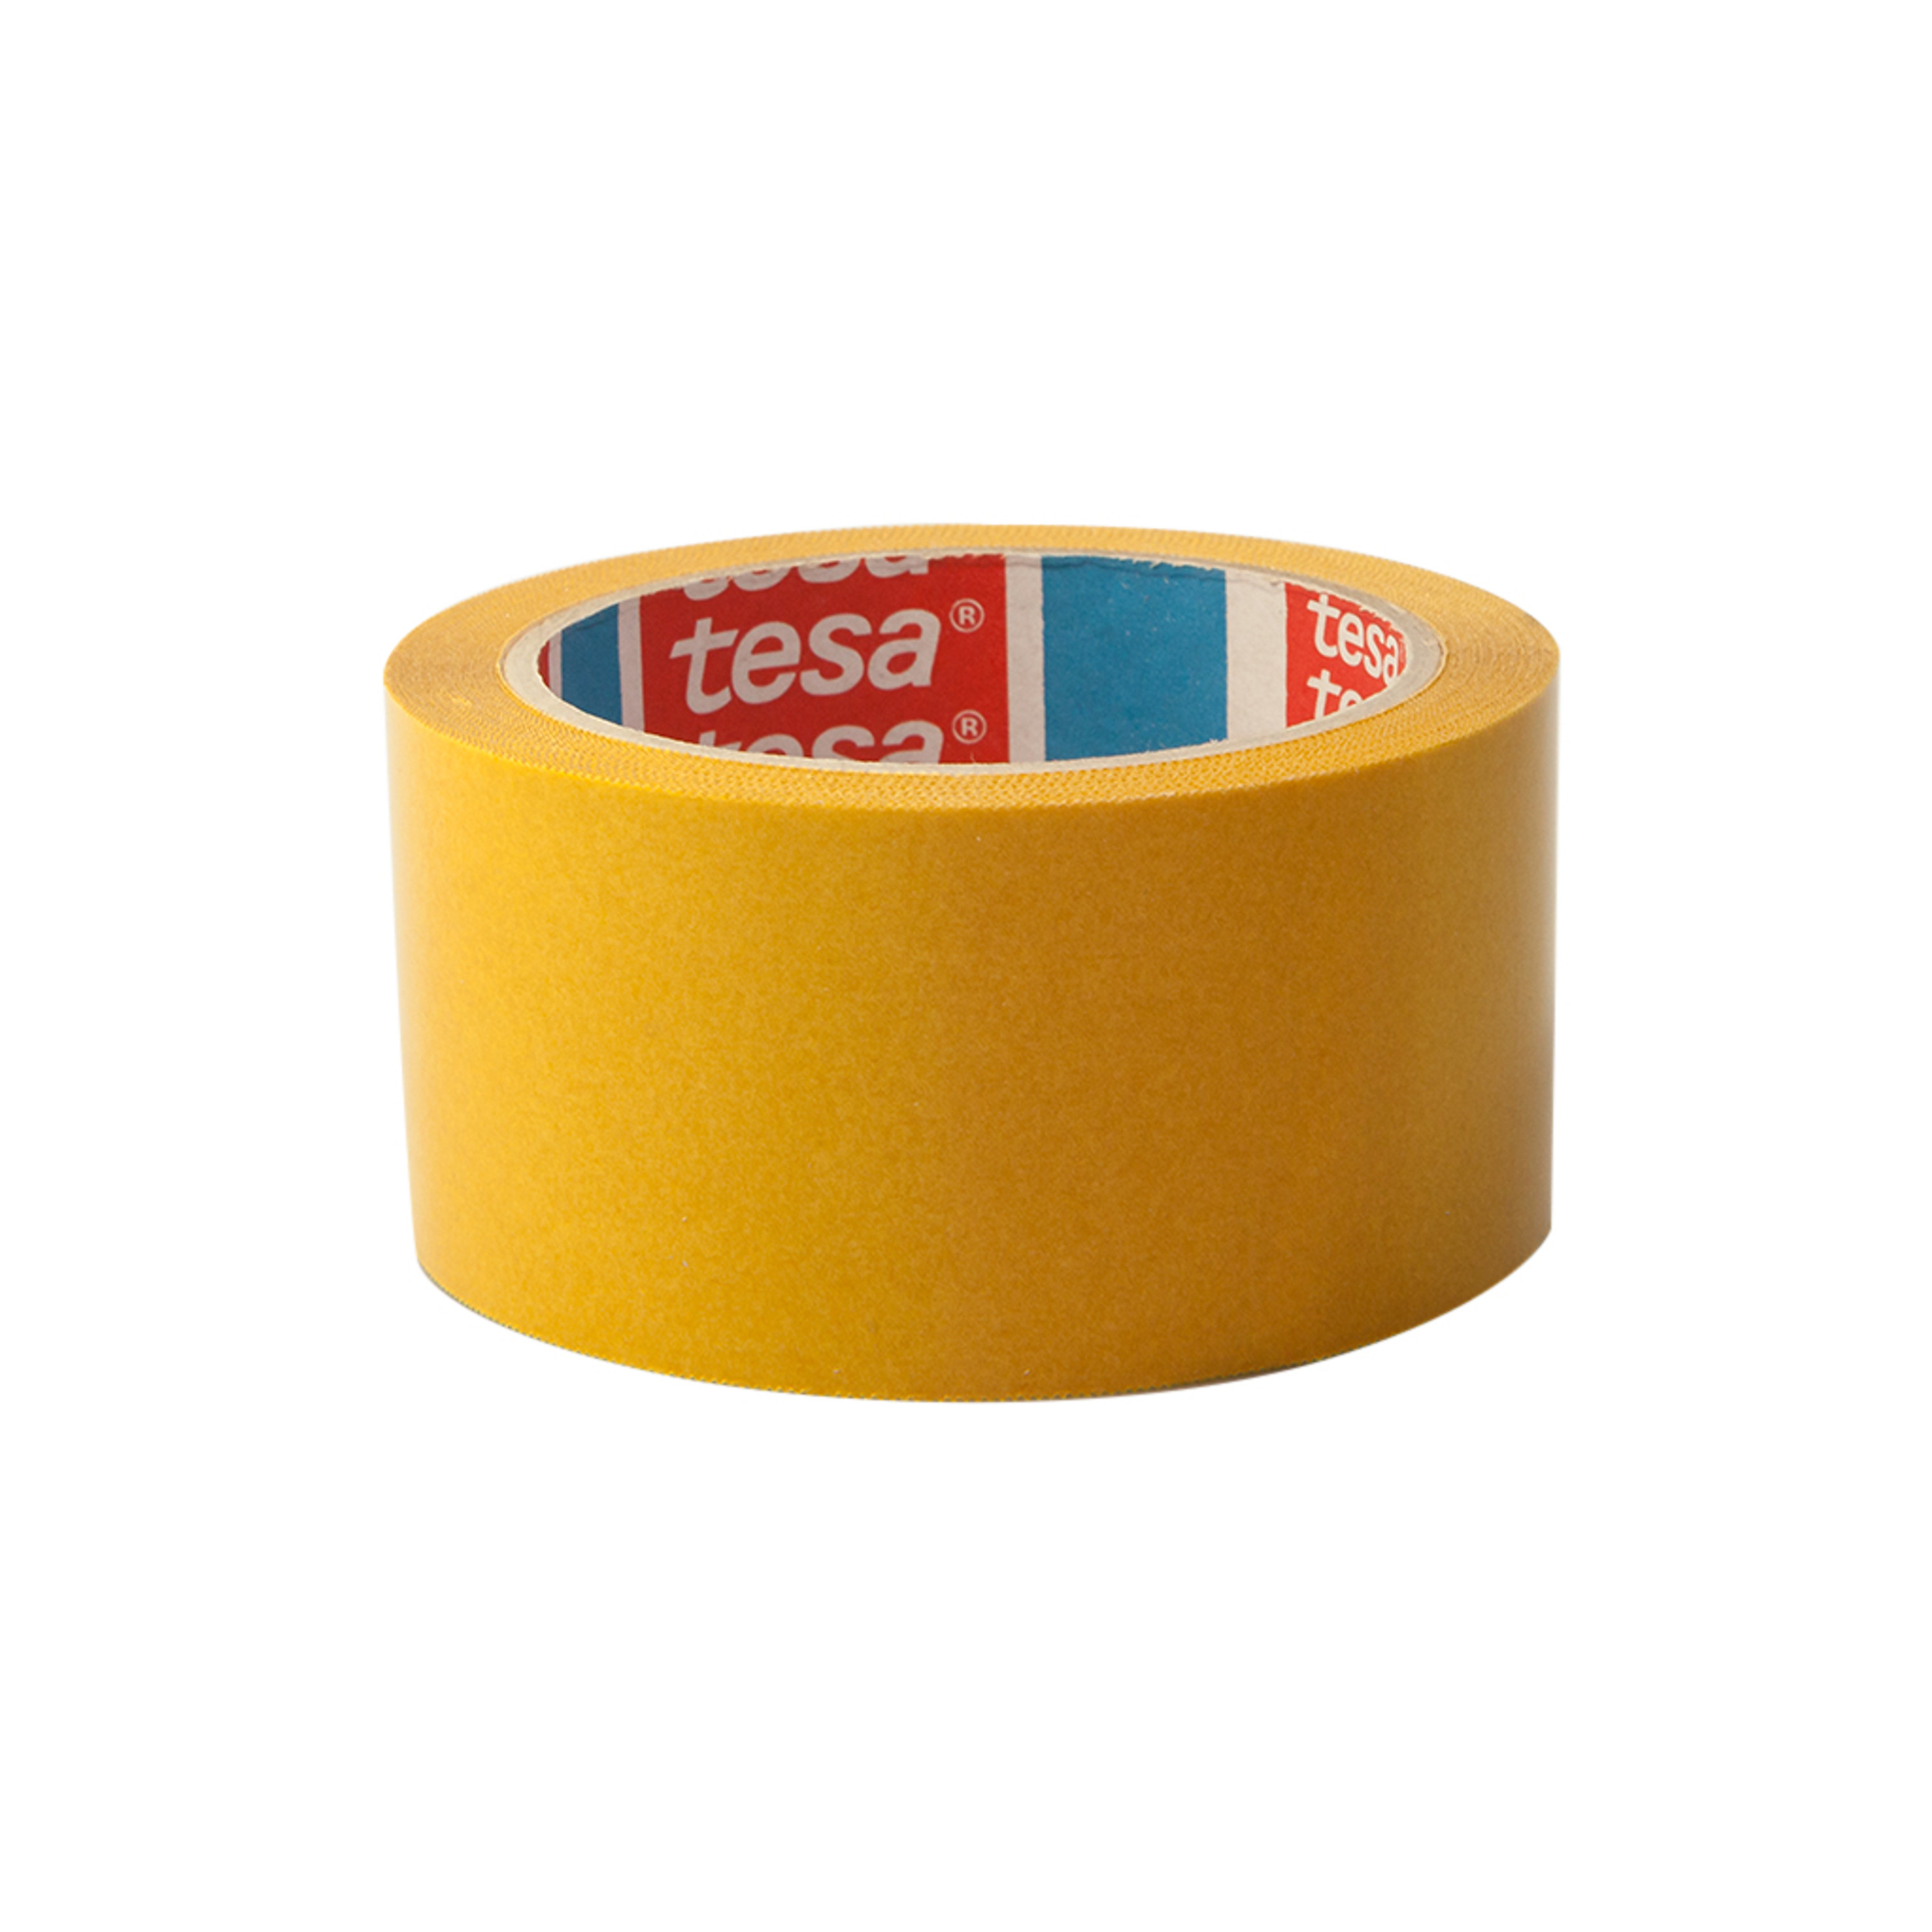 tesa 05696-00010 - Verlegeband, extra stark klebend, 25m x 50mm, beidseitig  klebend